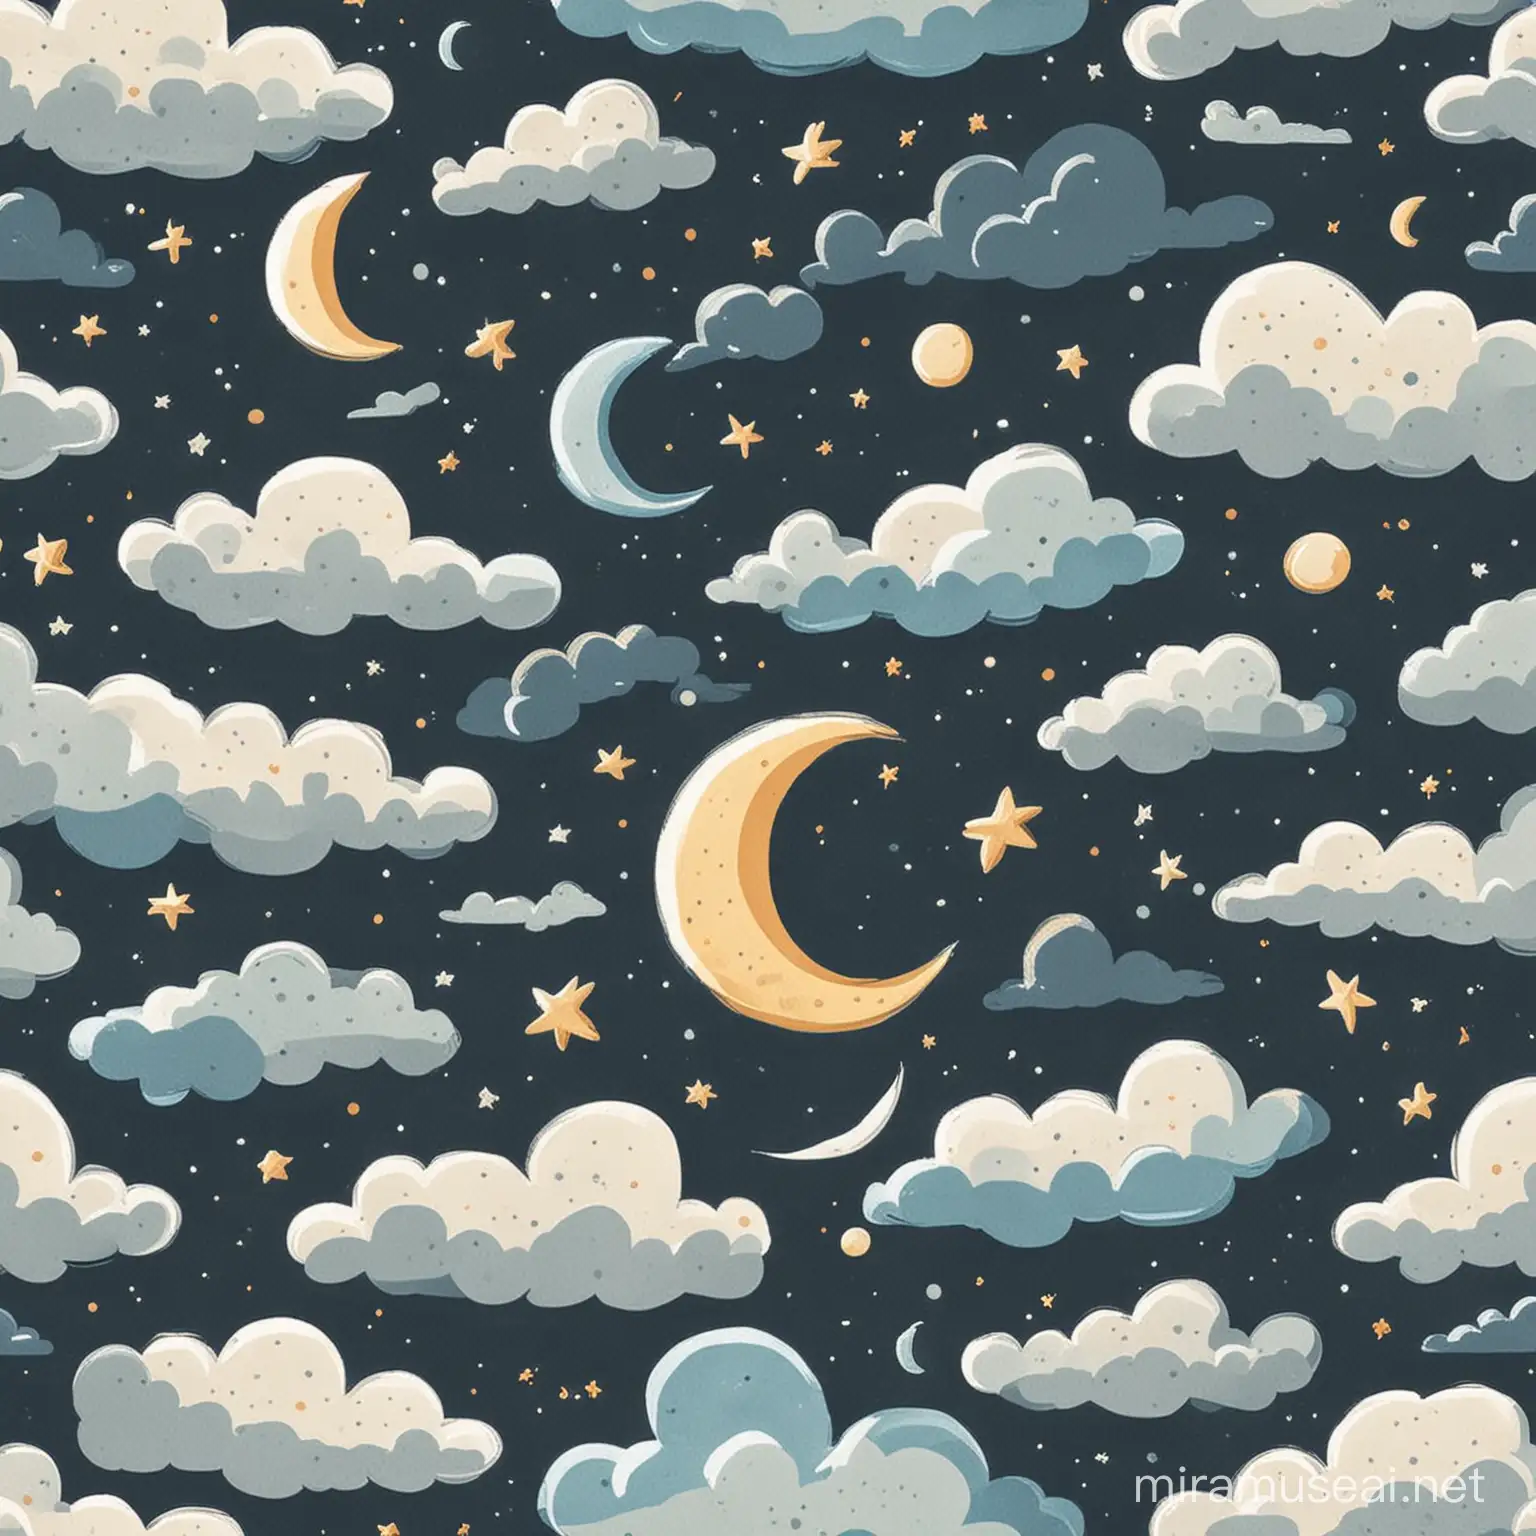 Cartoon like clouds and moons 